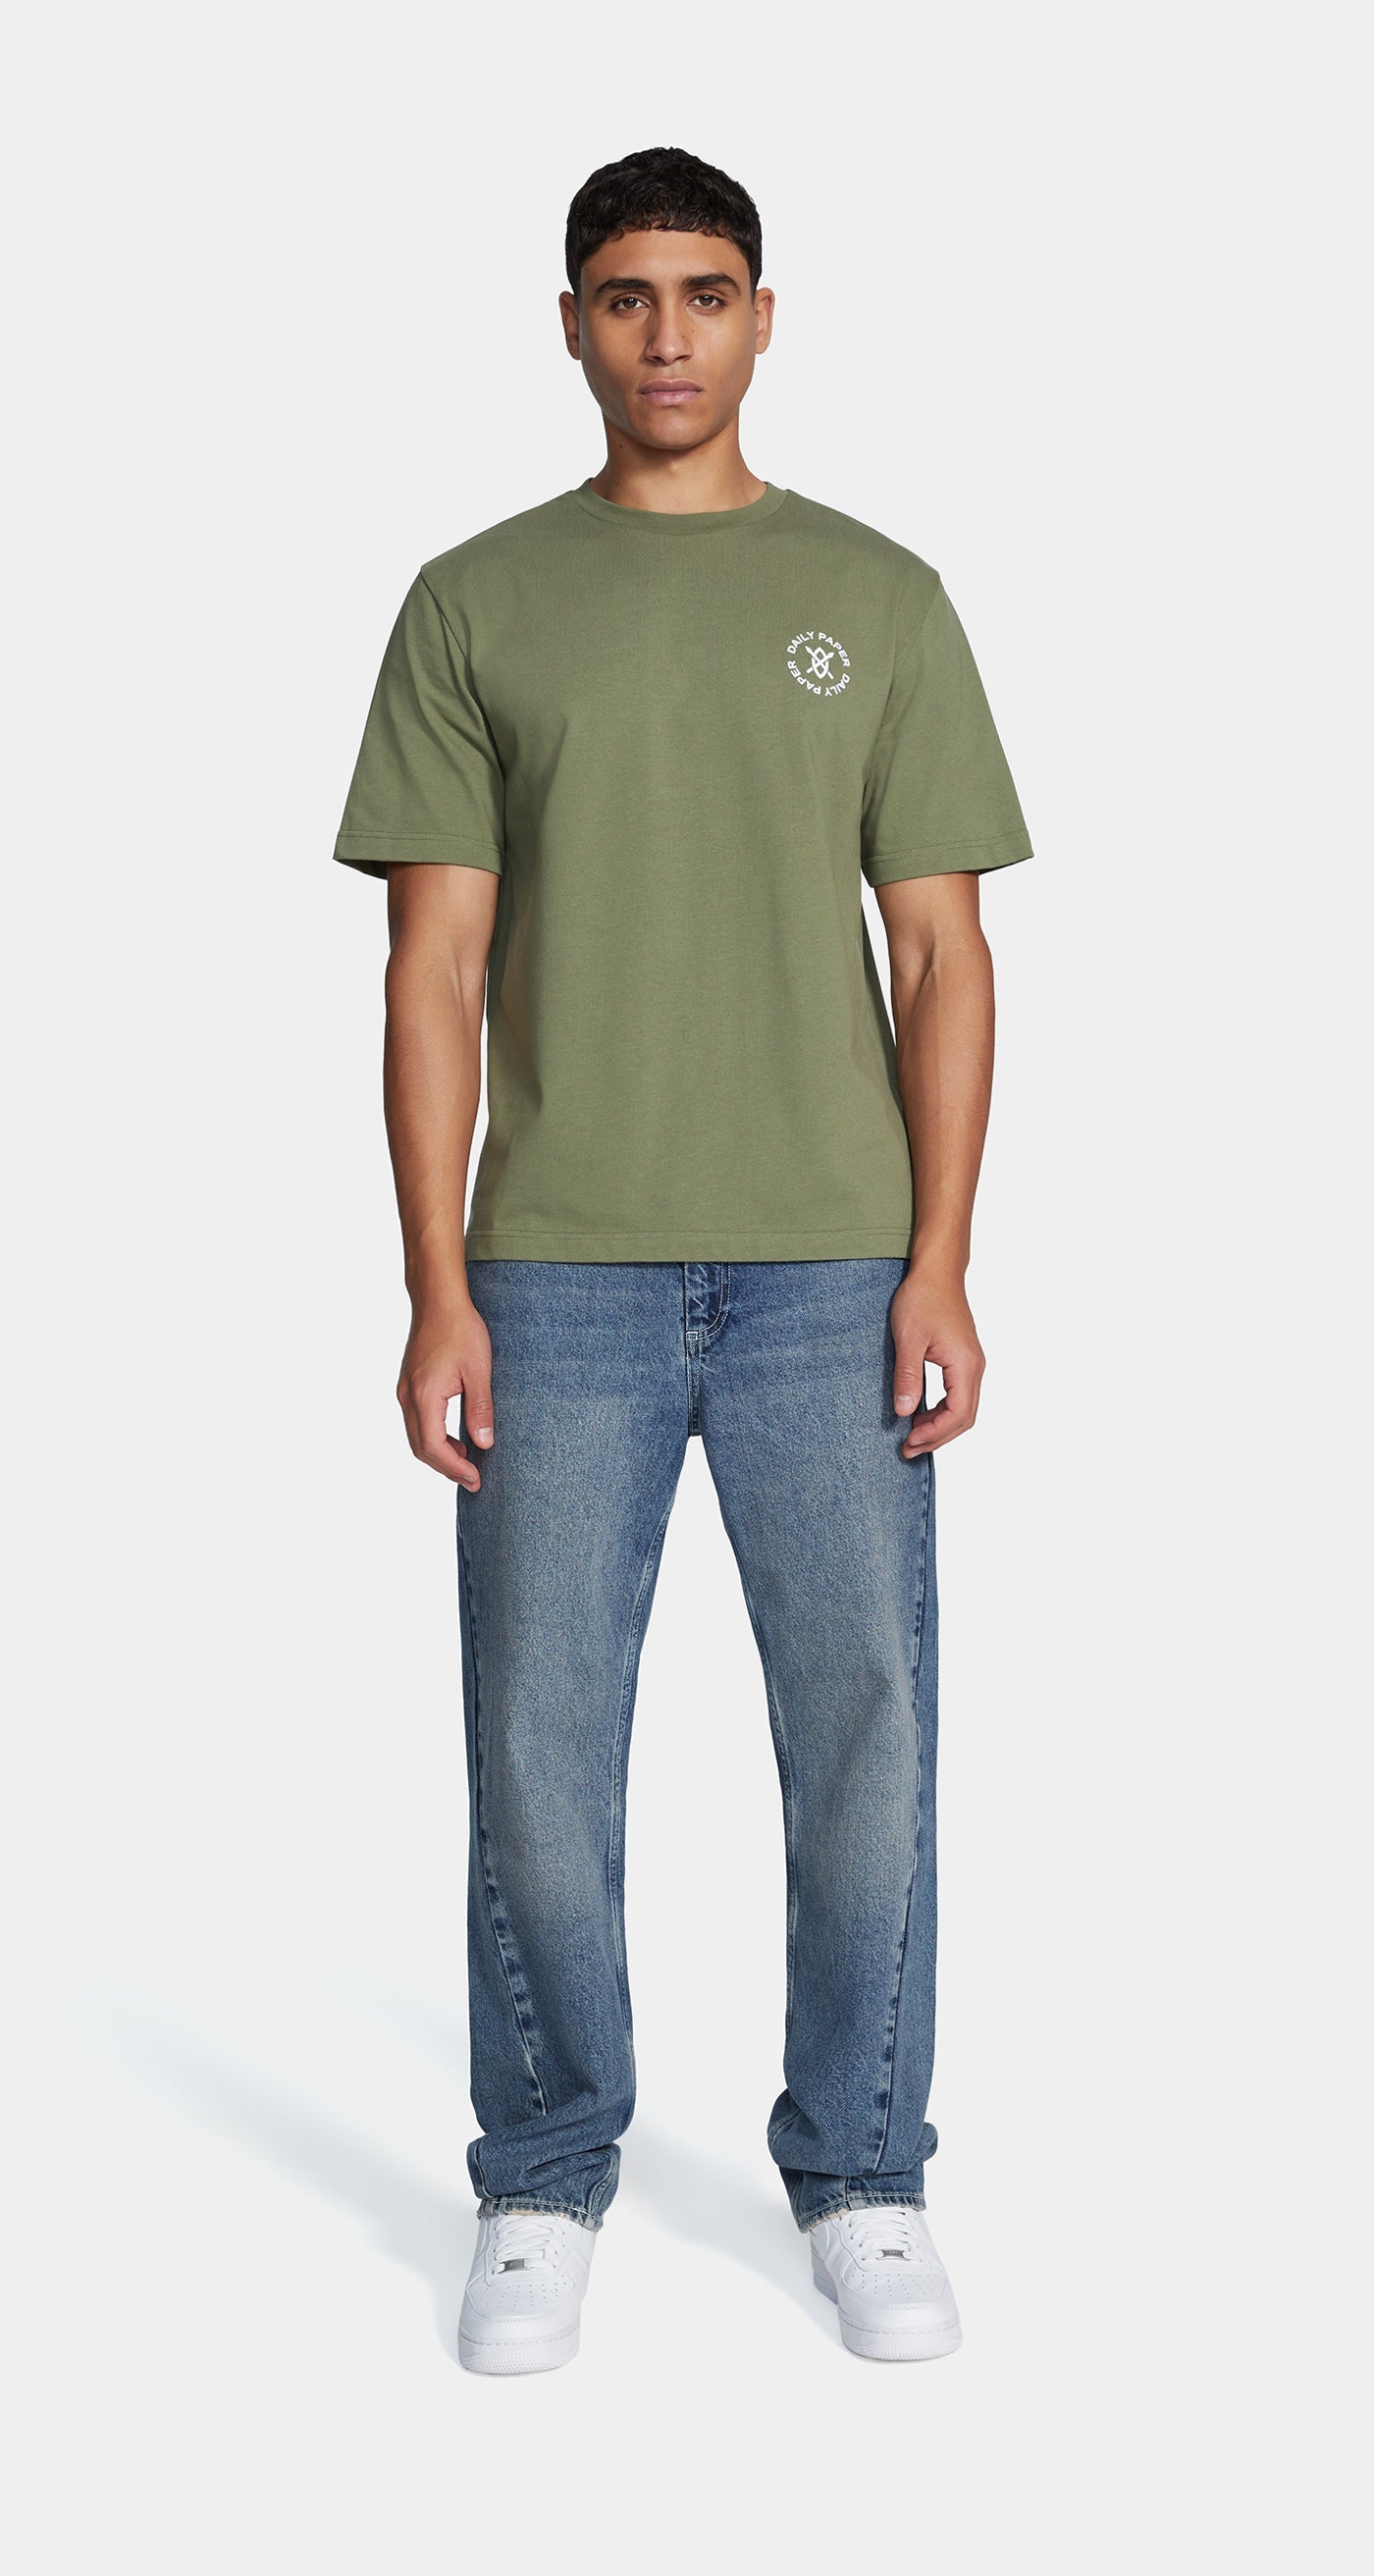 DP - Clover Green Circle T-Shirt - Men - Front